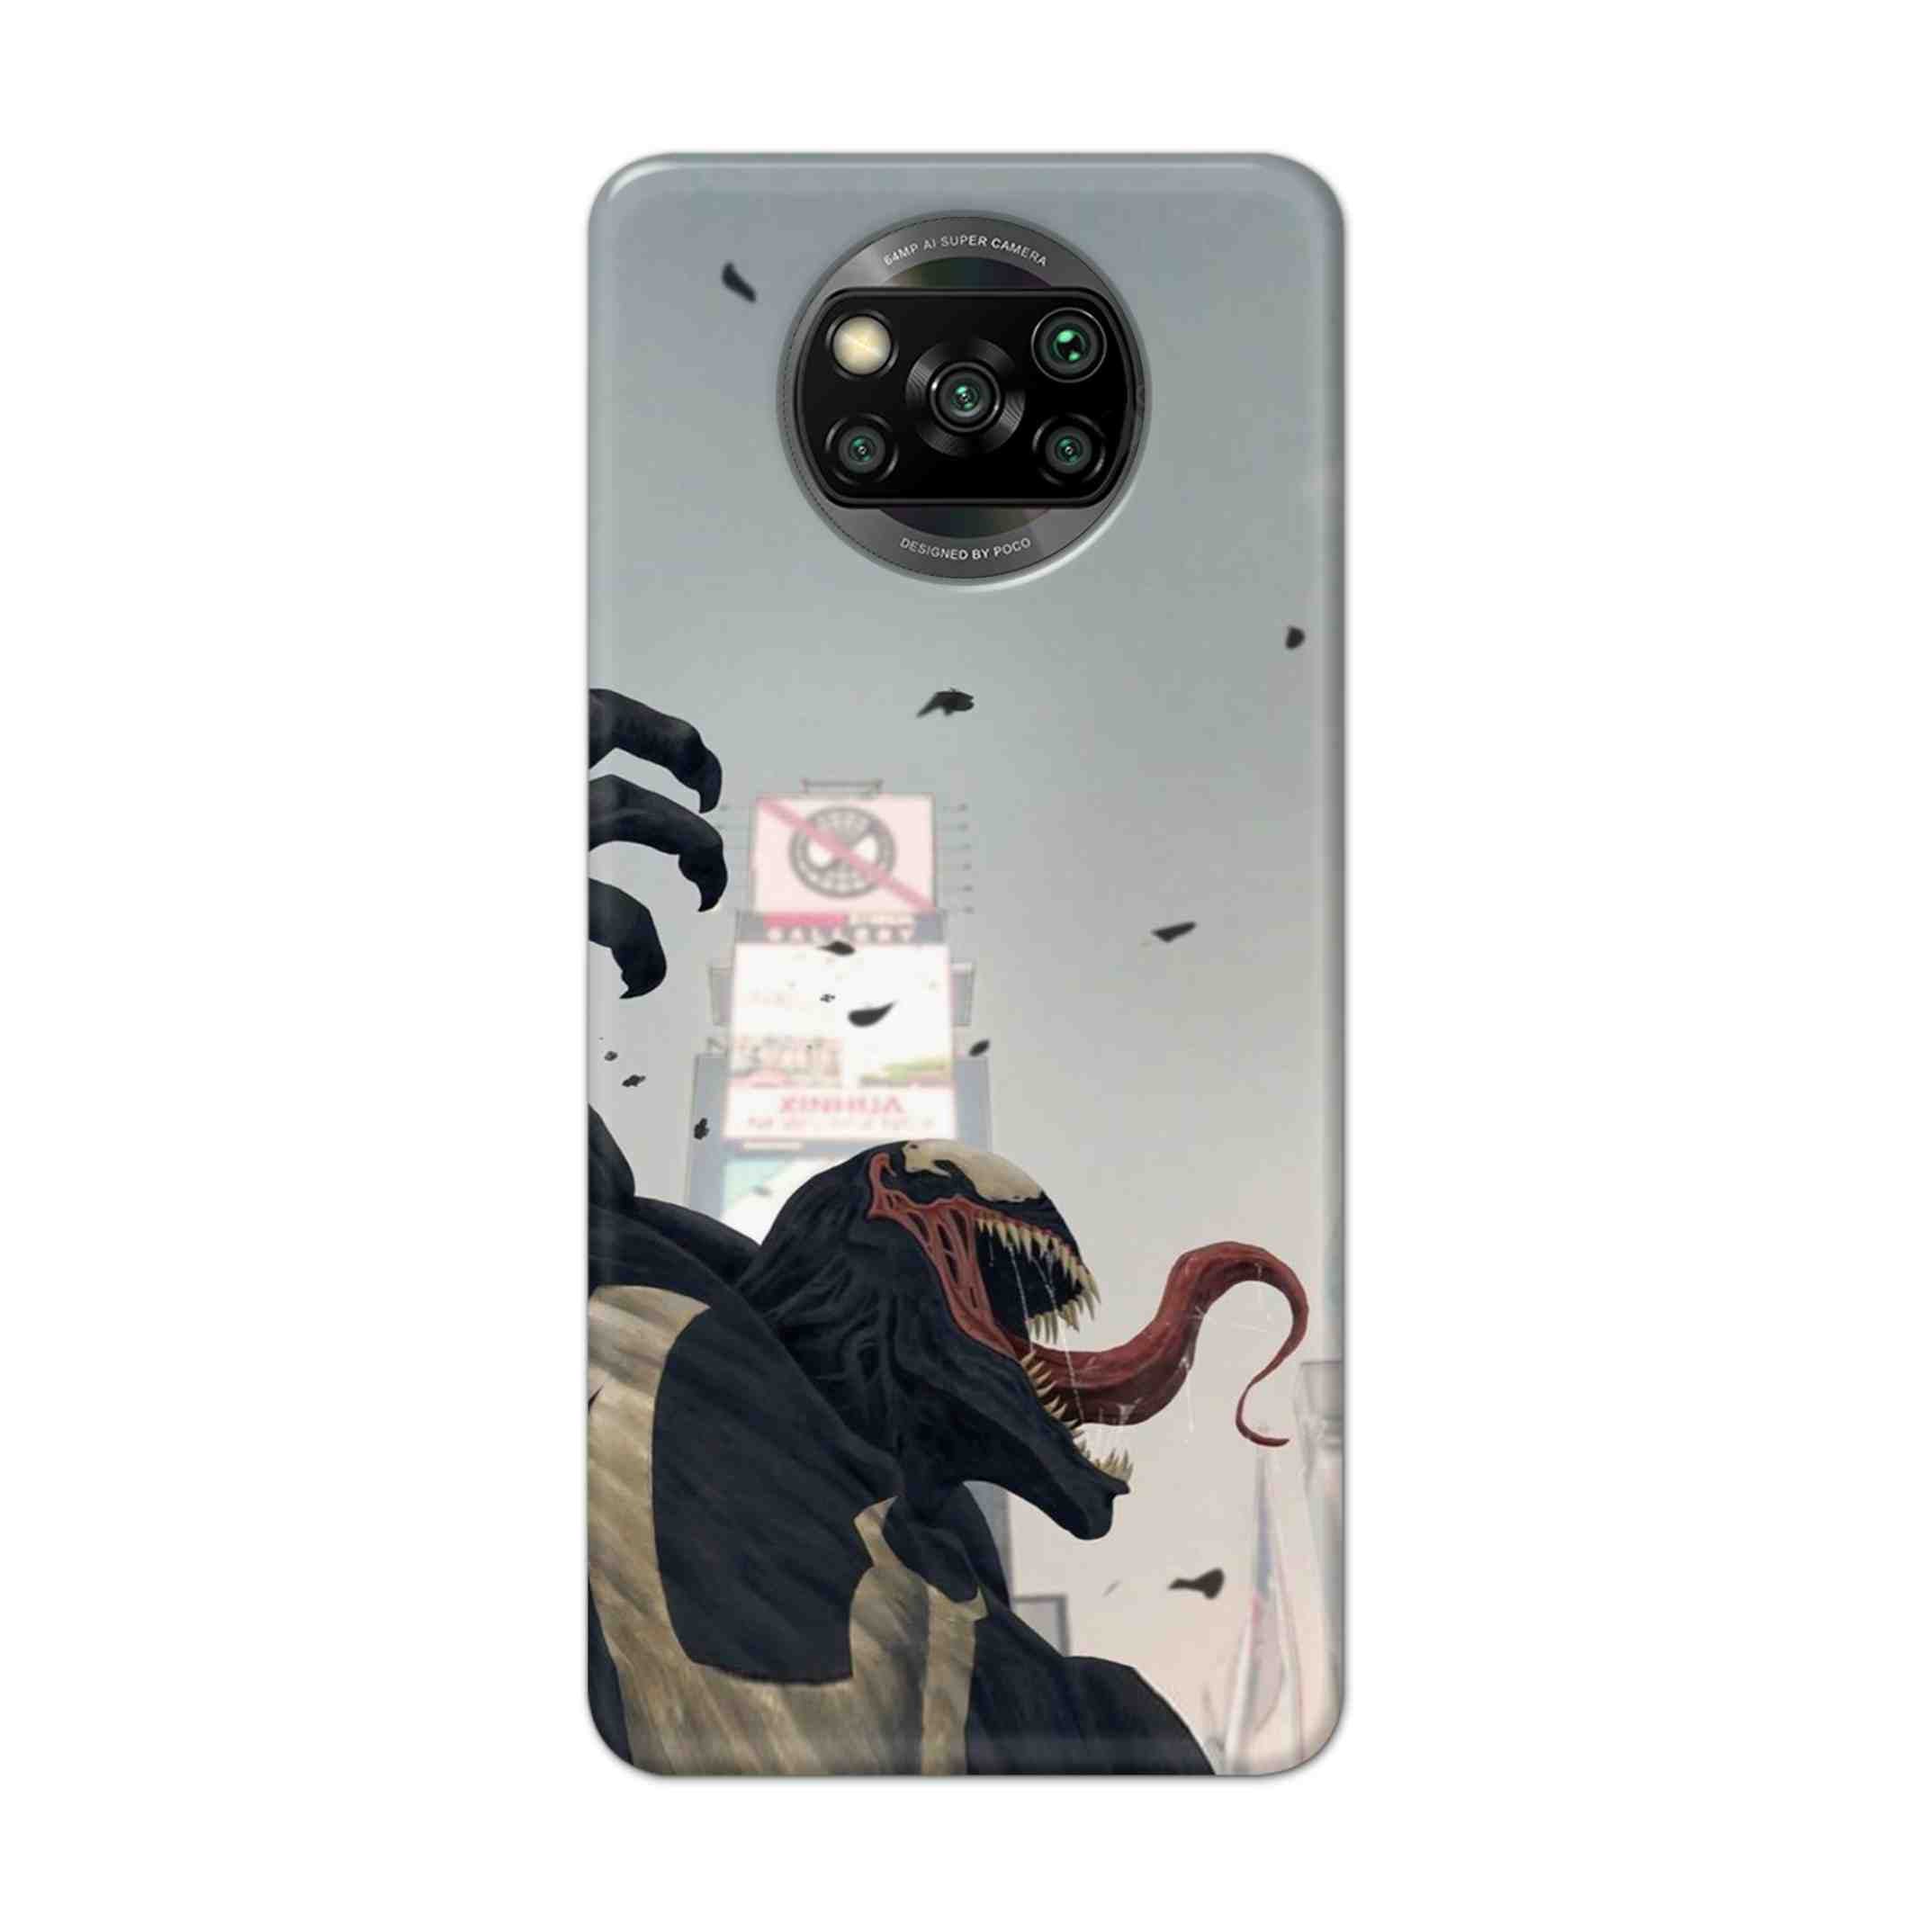 Buy Venom Crunch Hard Back Mobile Phone Case Cover For Pcoc X3 NFC Online